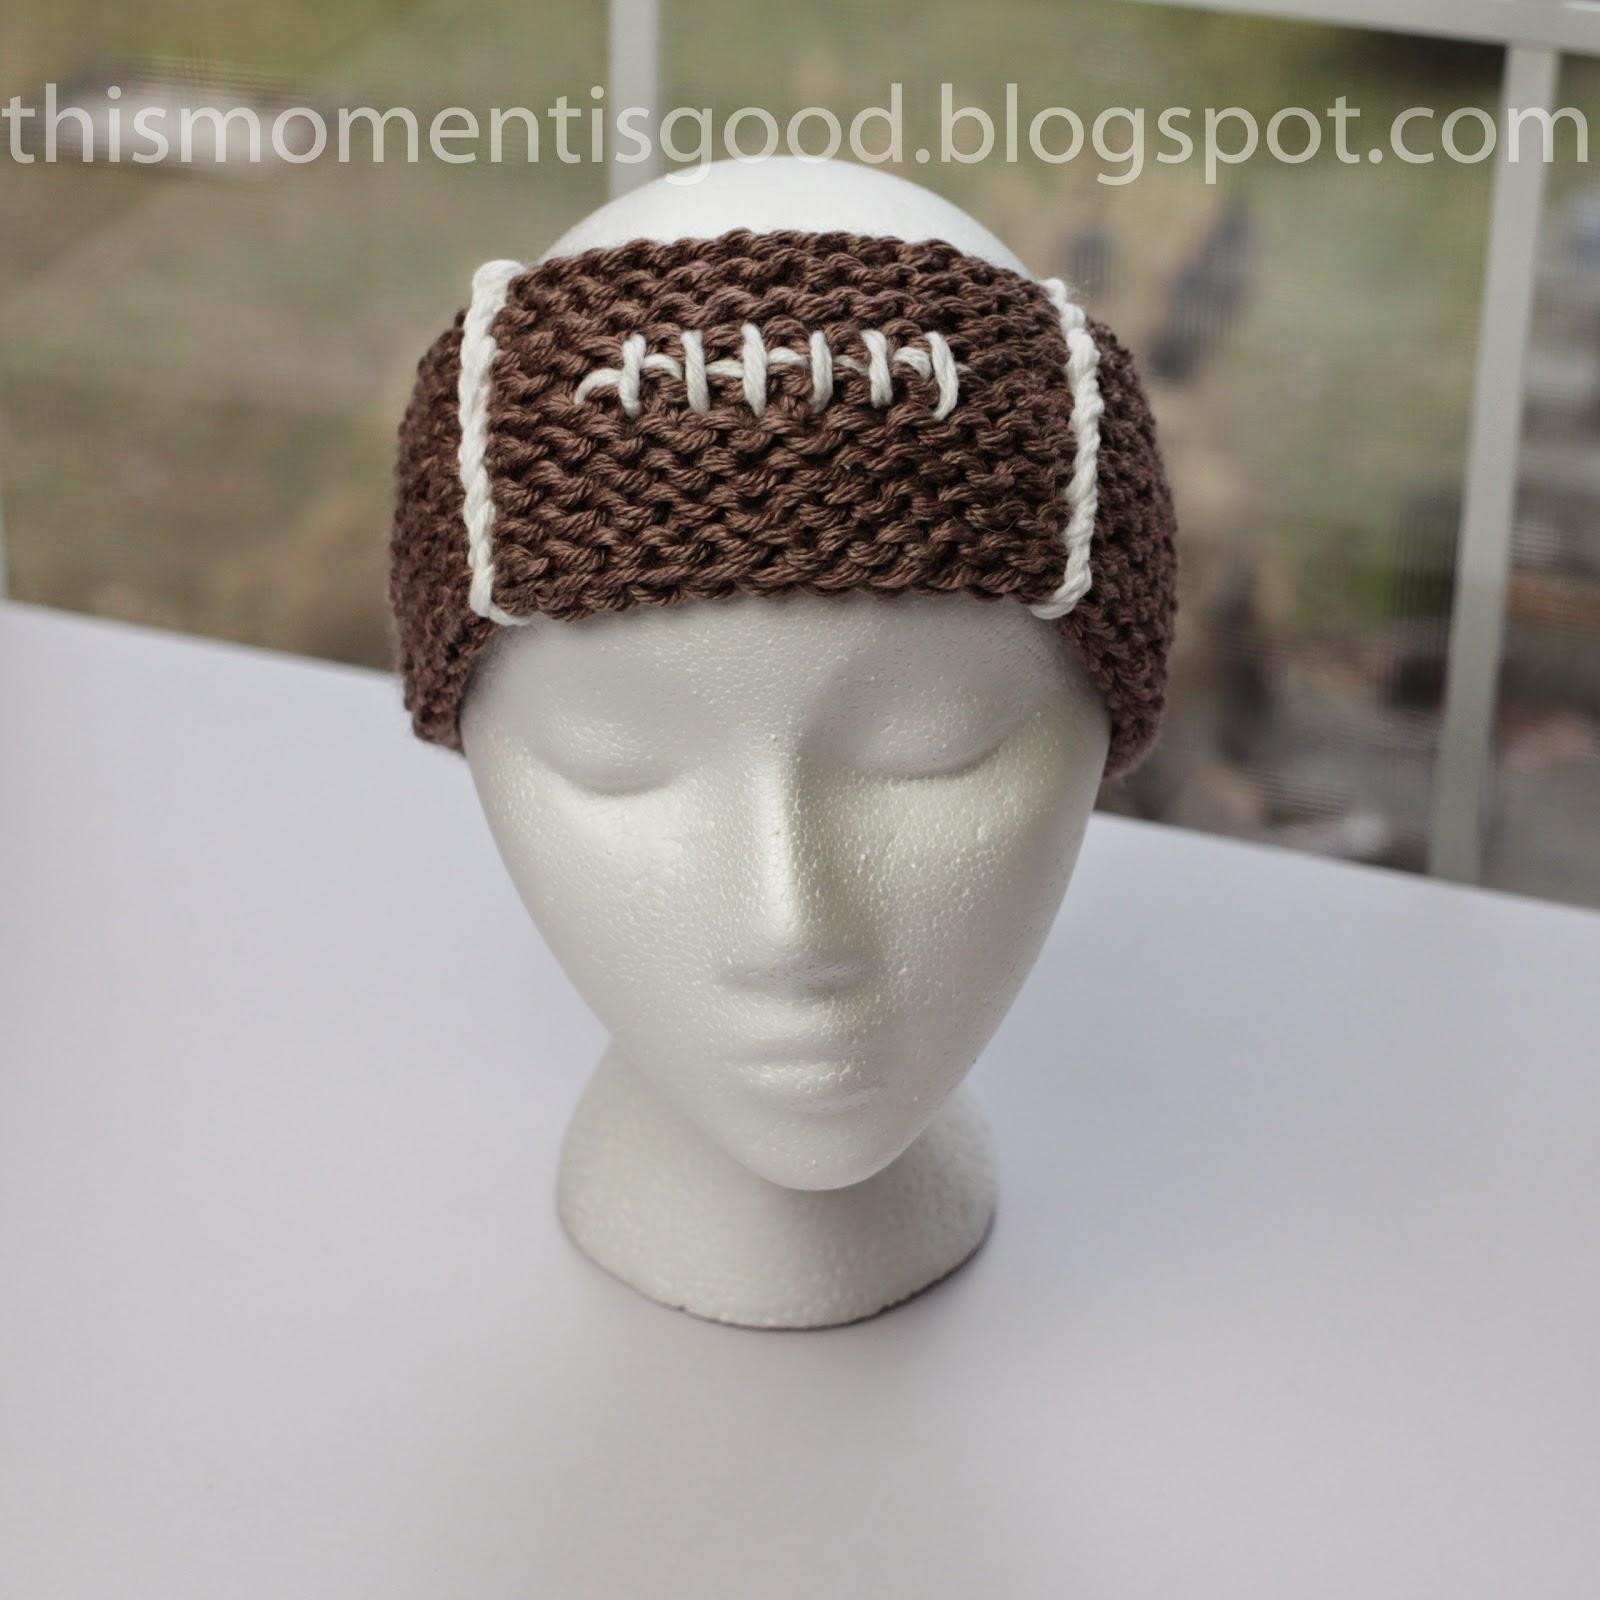 Loom Knit Hat Patterns Free Easy Loom Knit Football Headband Loom Knitting This Moment Is Good